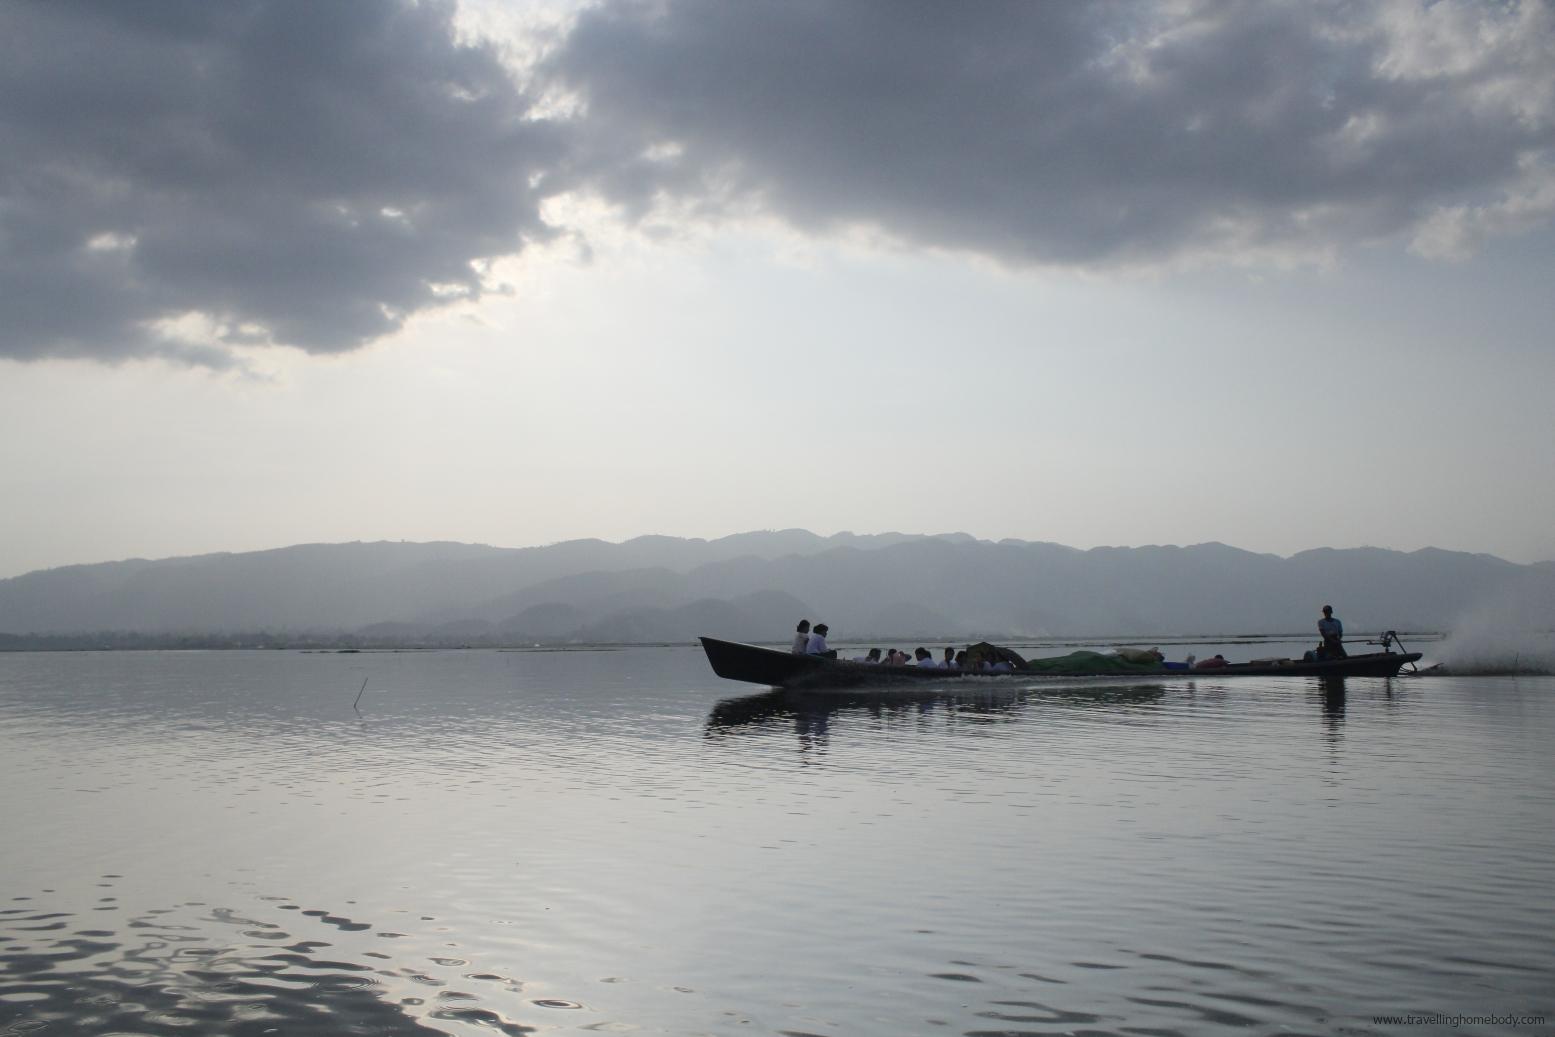 Travelling Homebody - Top Things to Do in Myanmar - Inle Lake